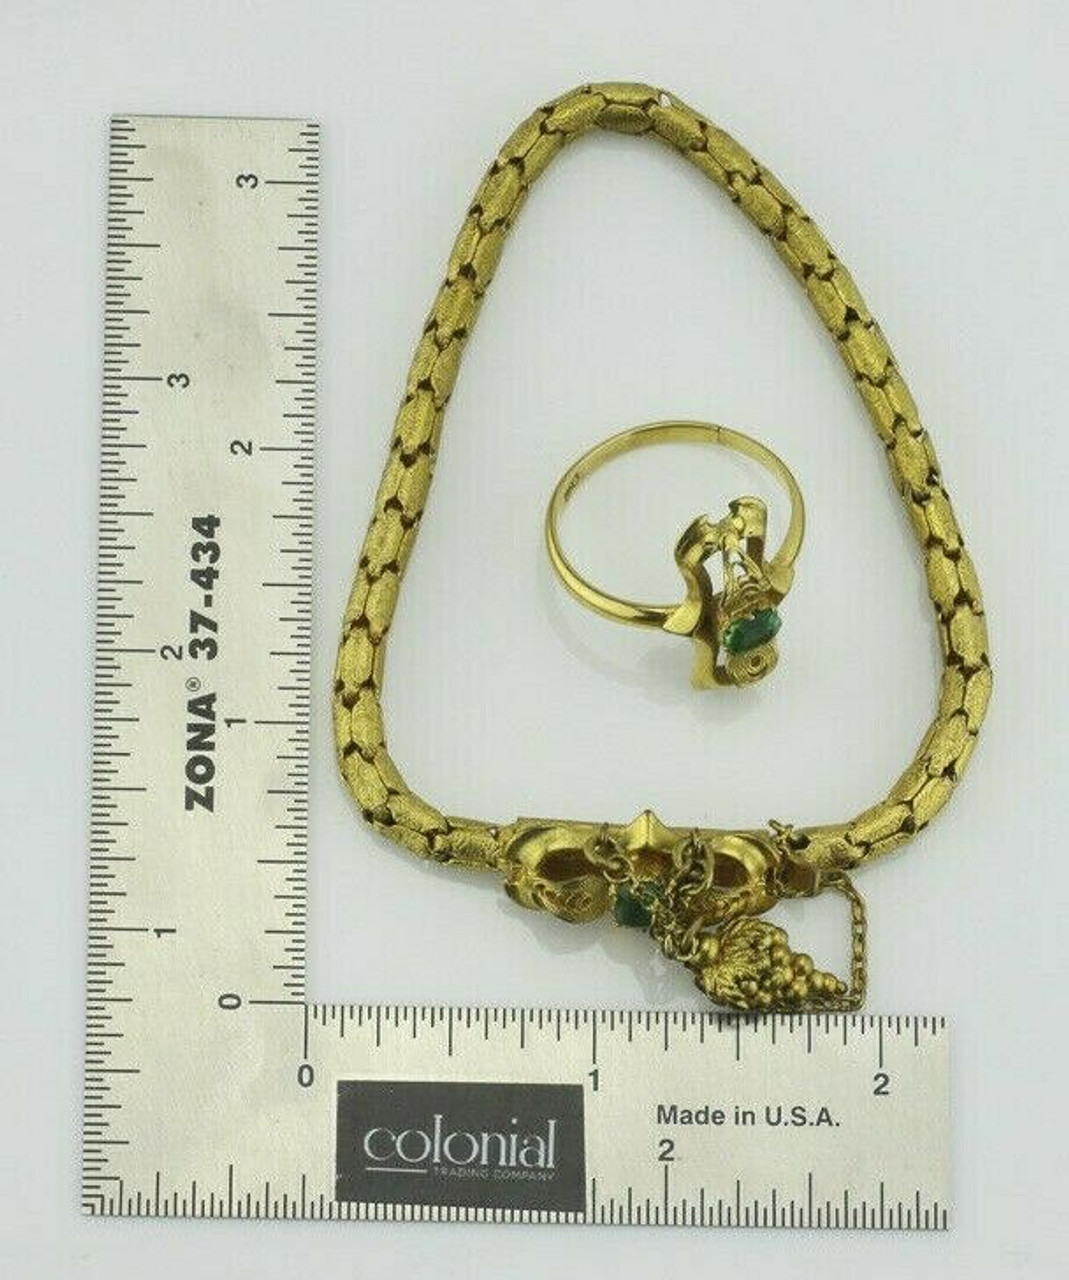 1870's Antique Victorian 14k Yellow Gold Fob Charm Bracelet